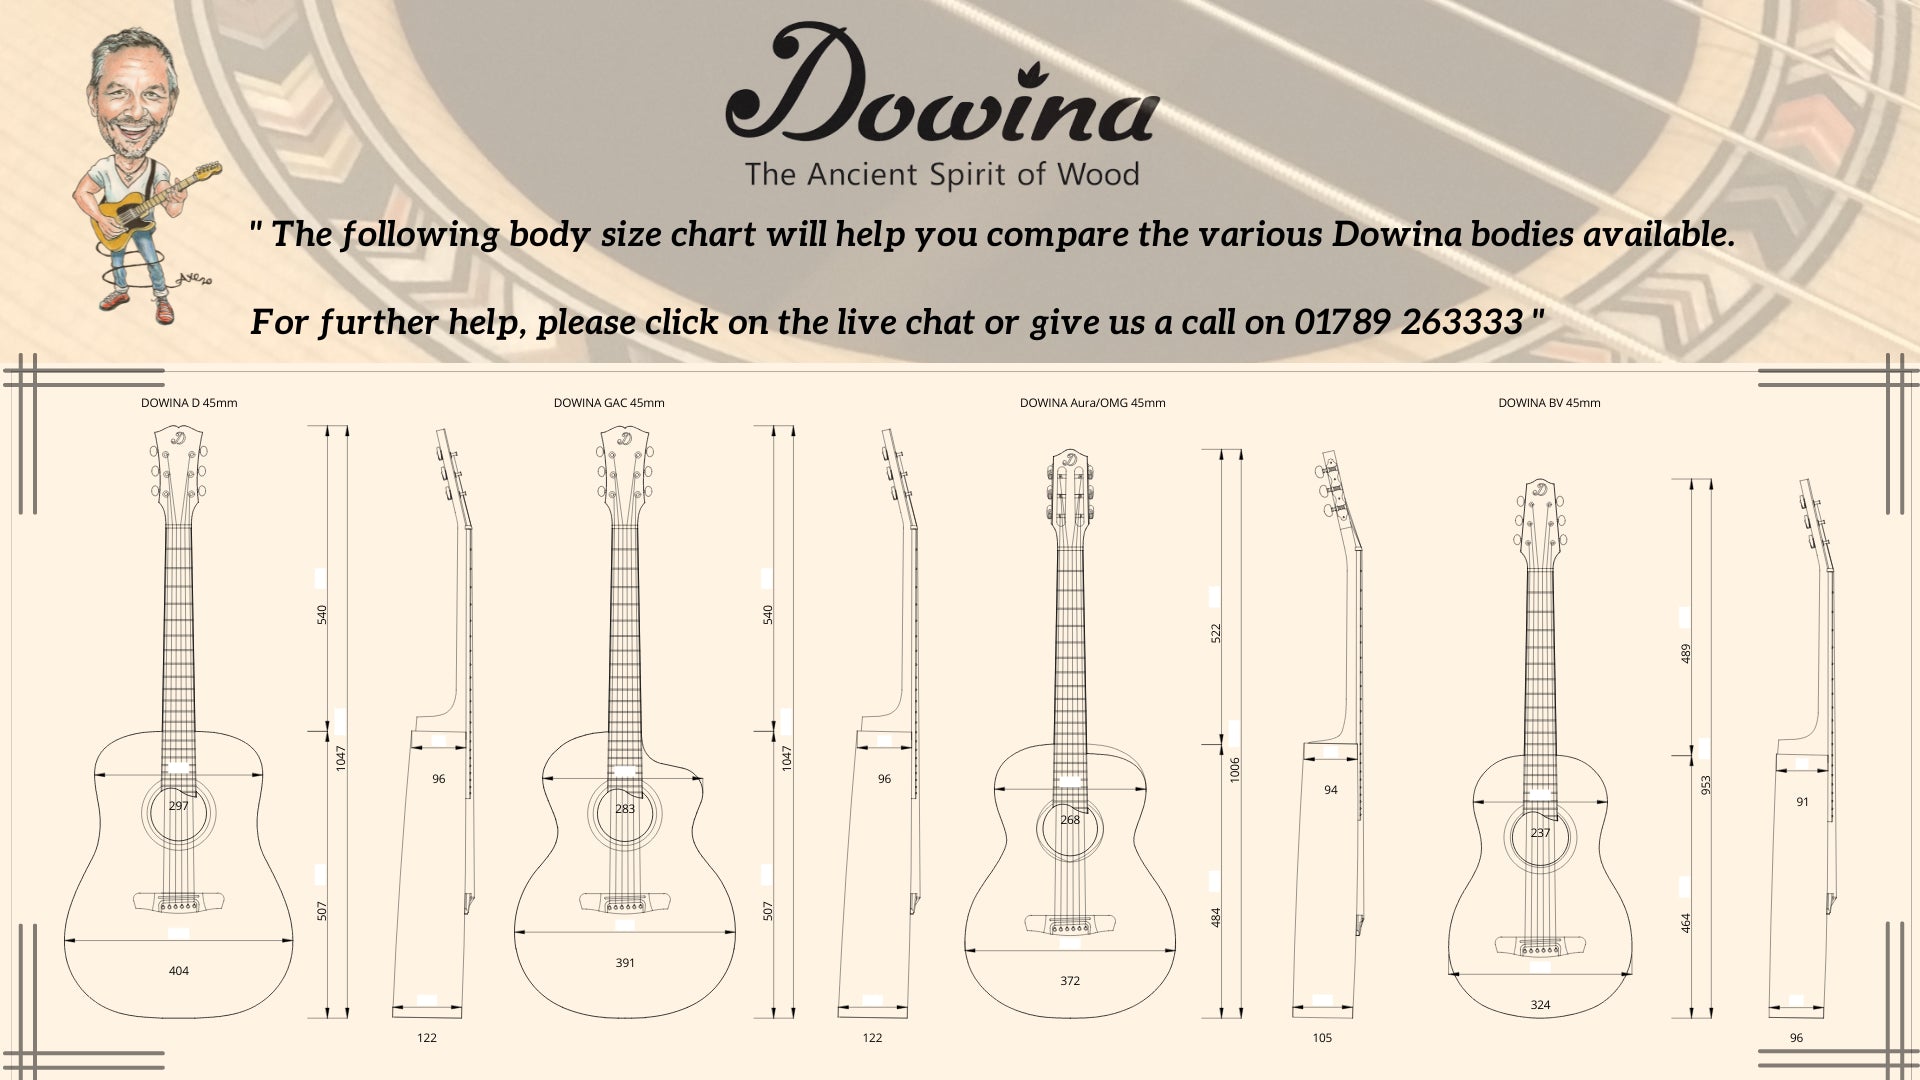 Dowina Master Built Strip Padauk HC Deluxe With Torrified Swiss Spruce Top, Nylon Strung Guitar for sale at Richards Guitars.